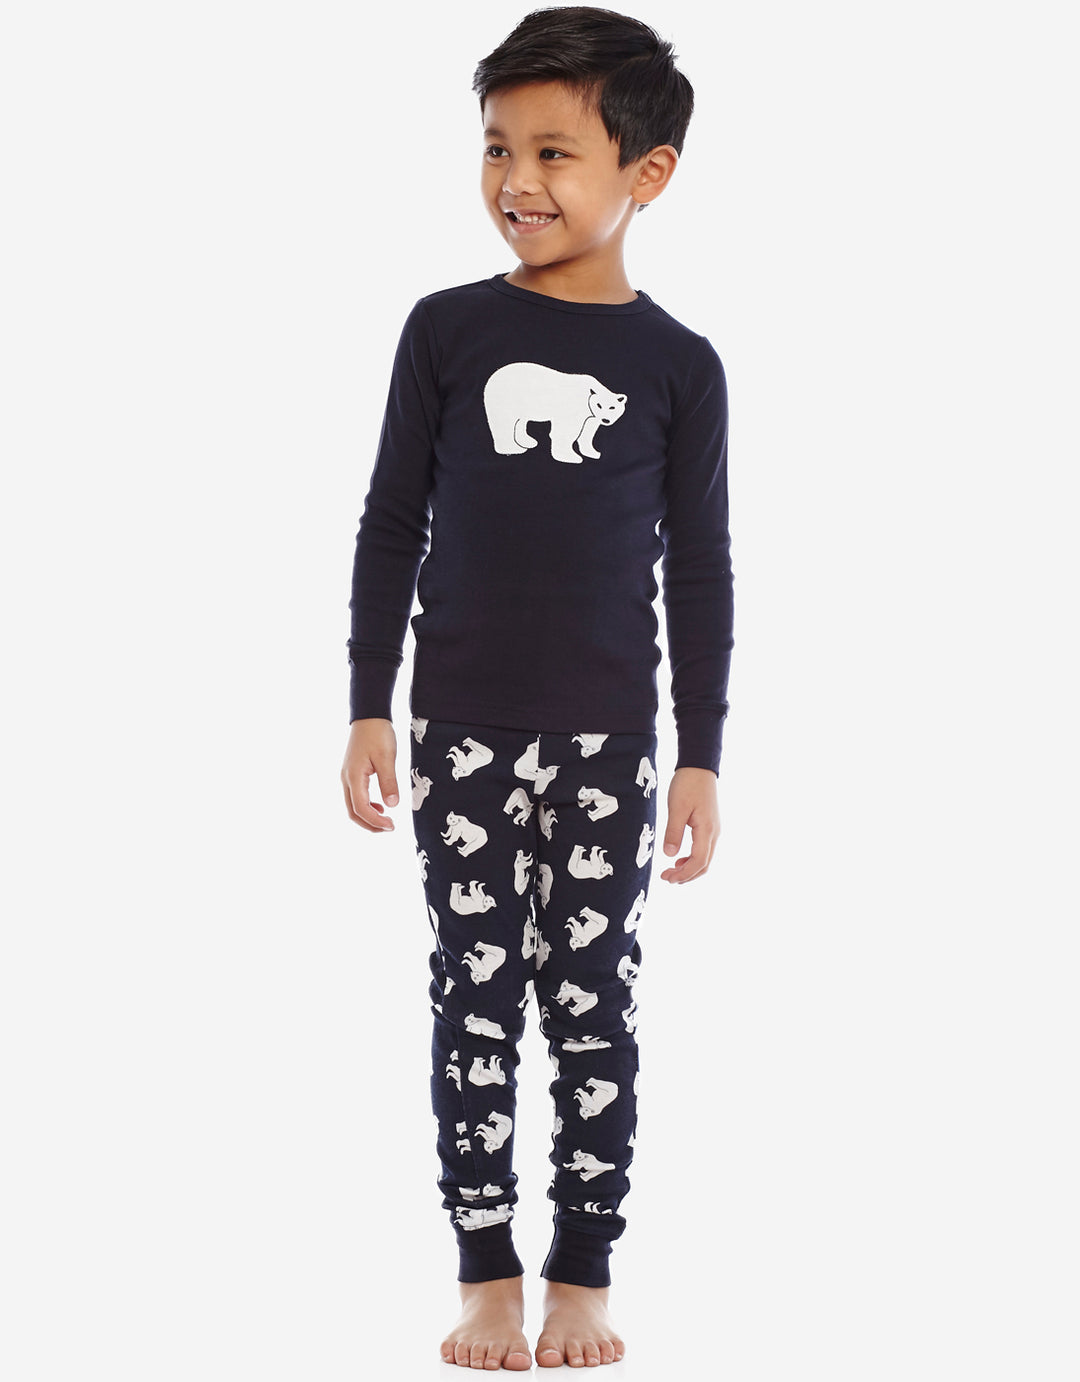 Merry Makers Men's Woven Print Pajama Pants in Polar Bear